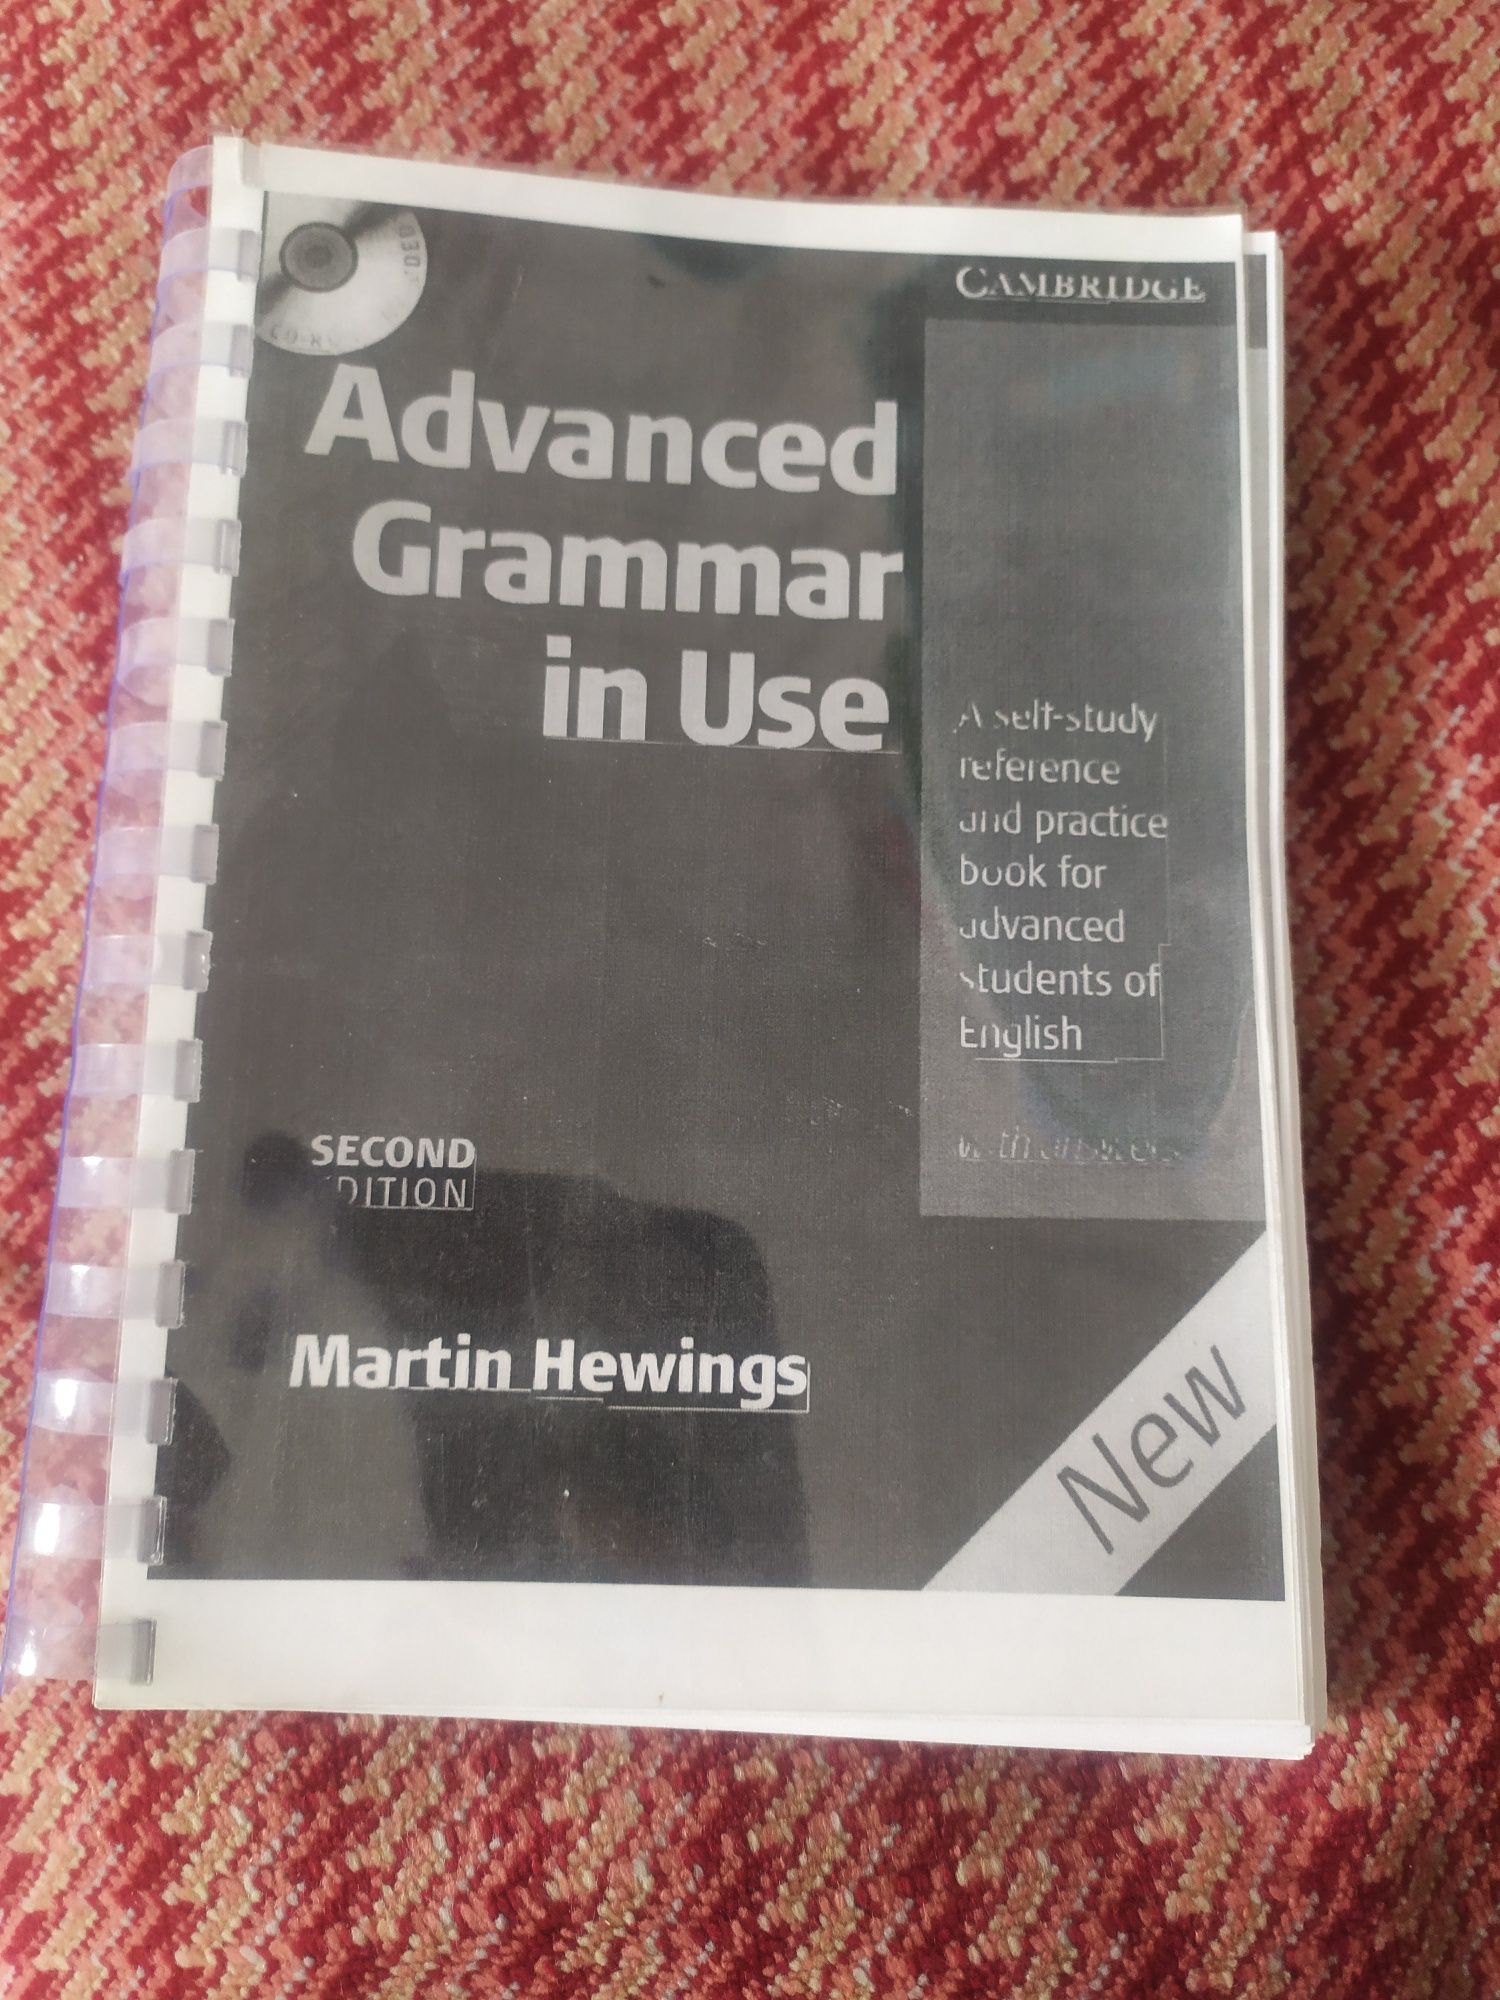 English books in Use